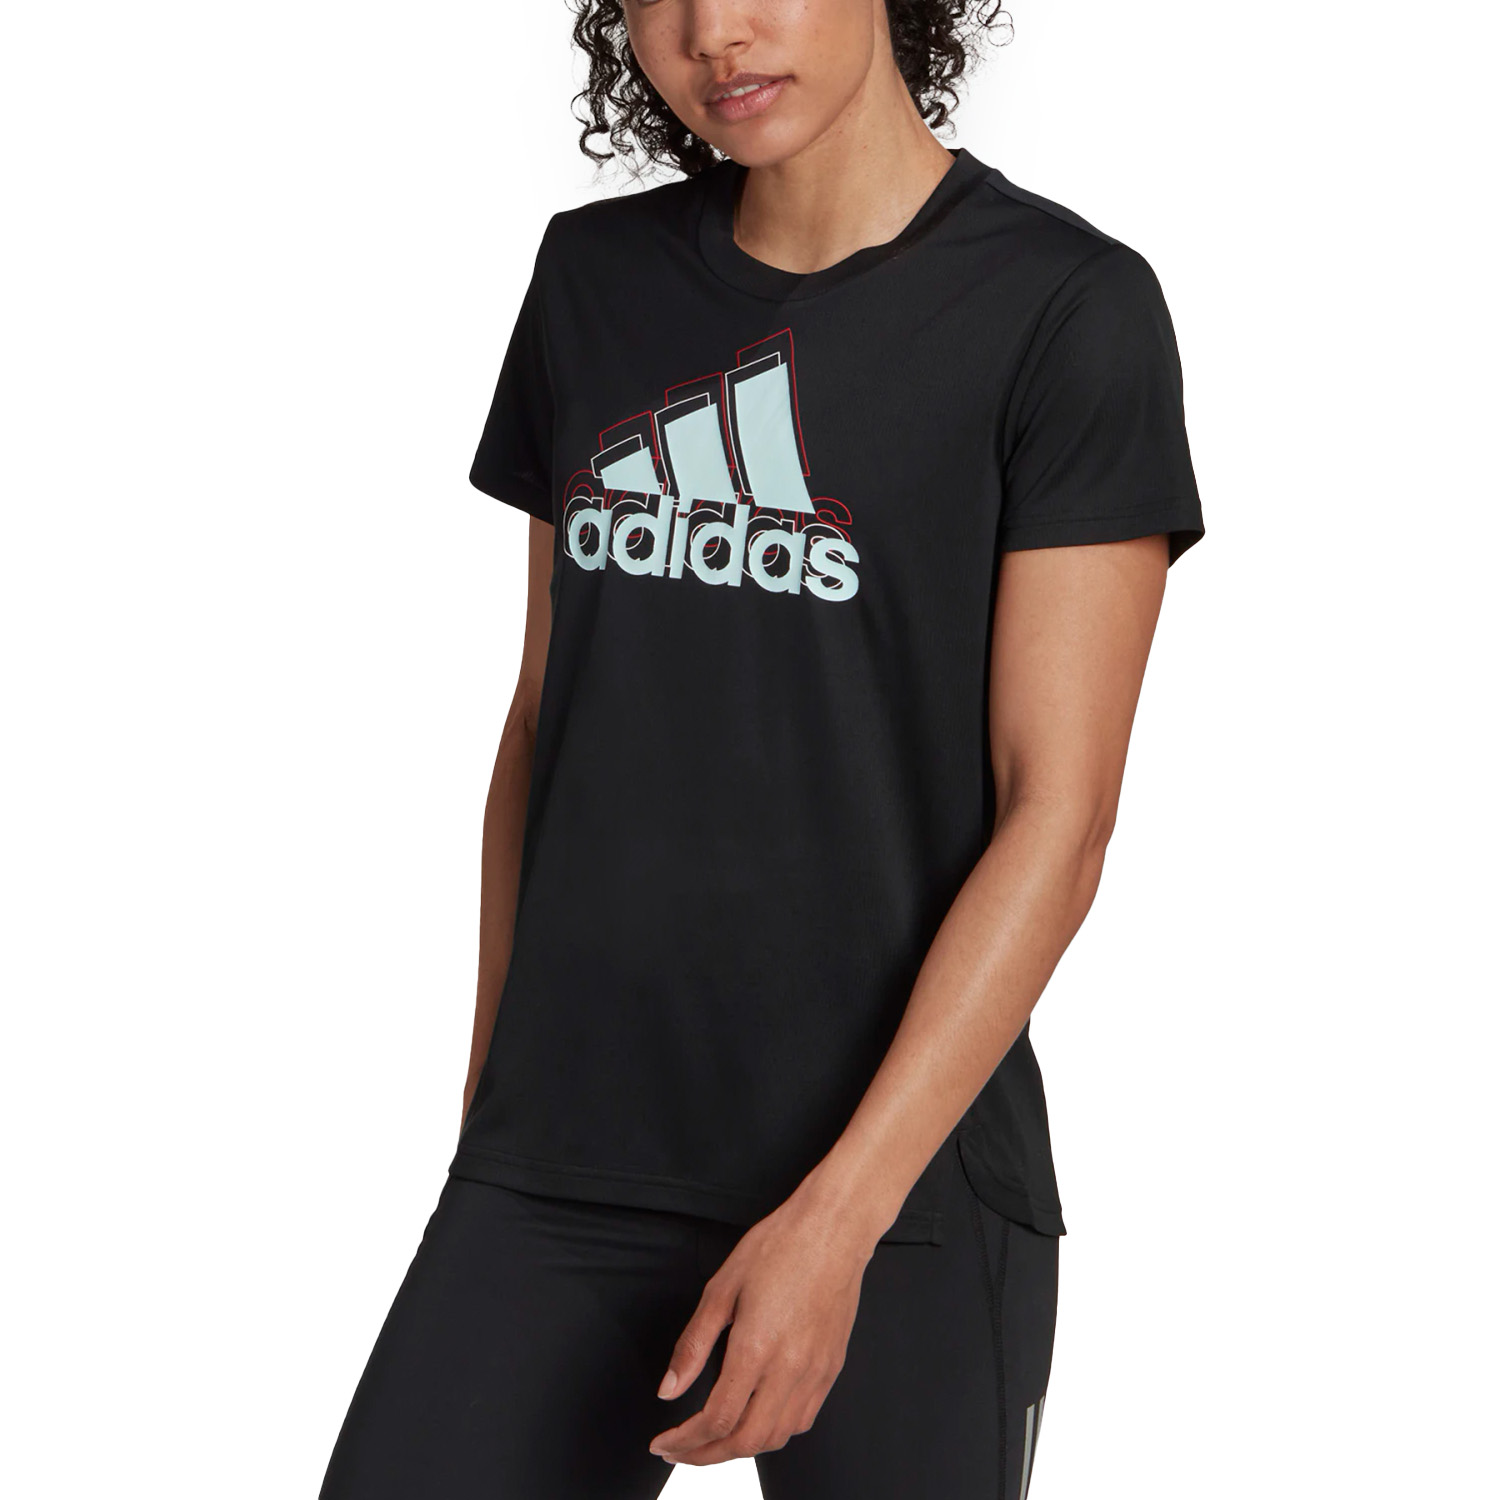 adidas Brand Love T-Shirt - Black